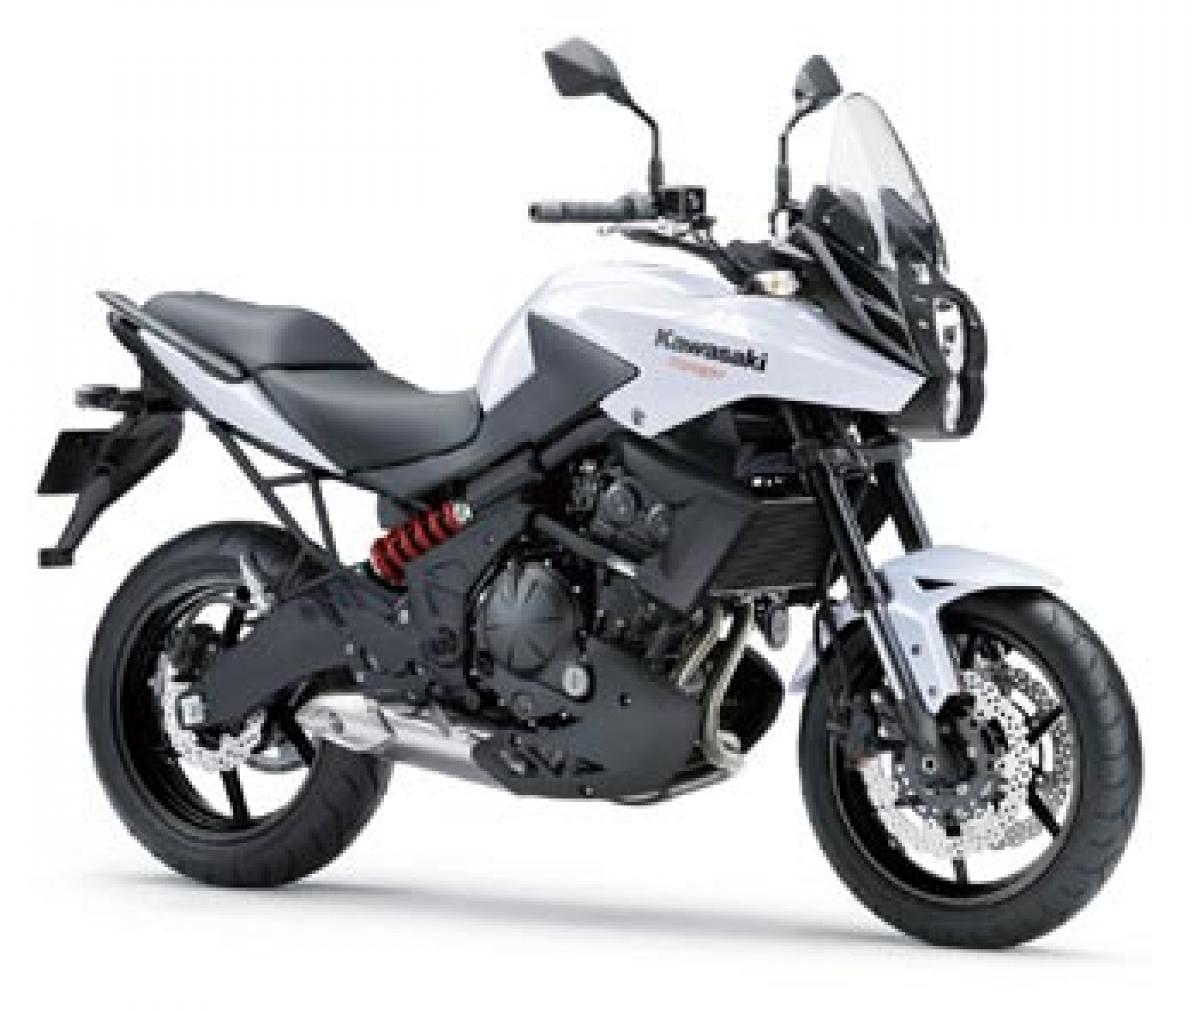 Kawasaki Versys 650 to launch this December